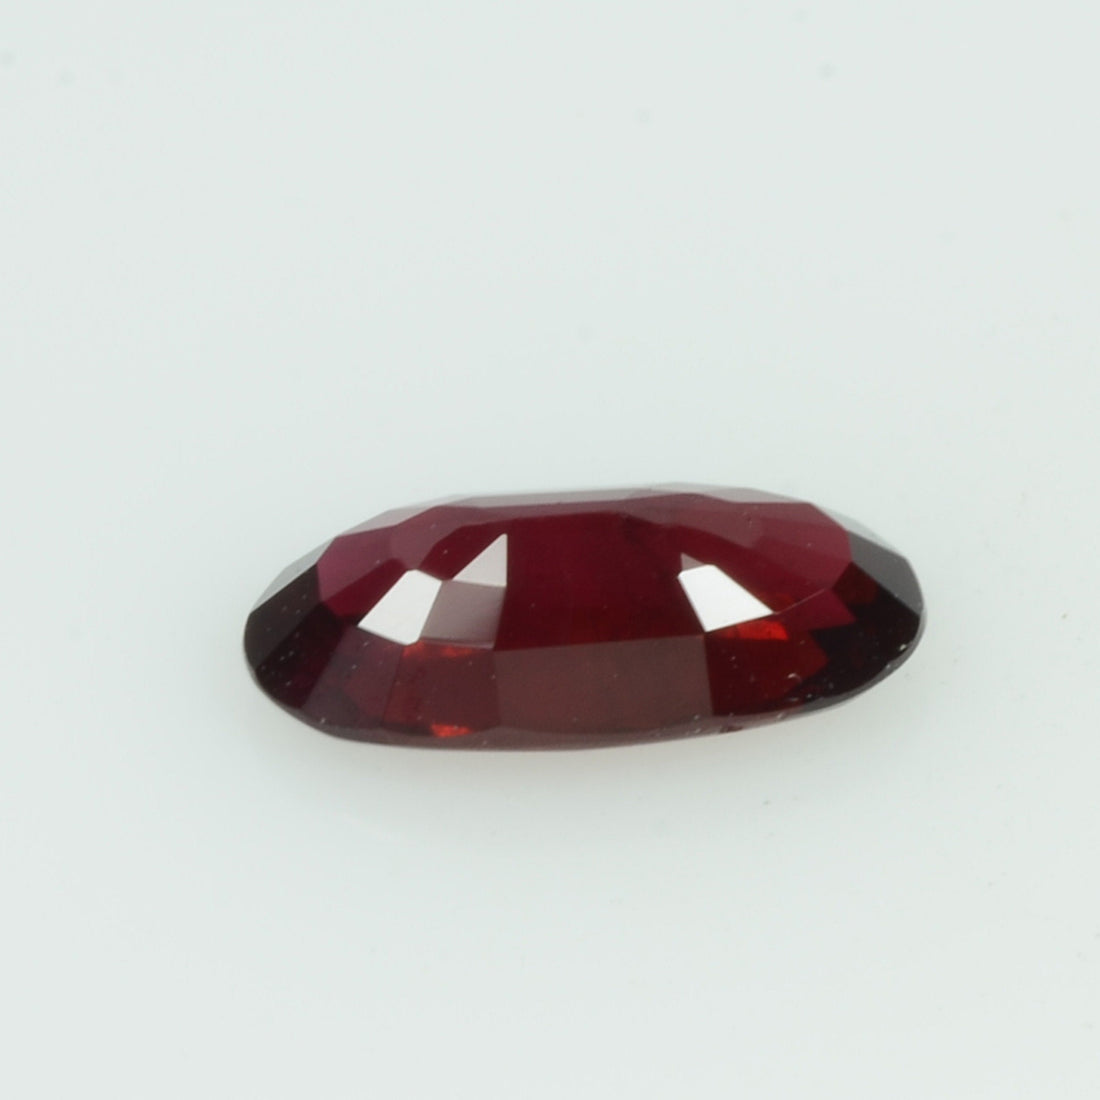 0.65 Cts Natural Burma Ruby Loose Gemstone Oval Cut